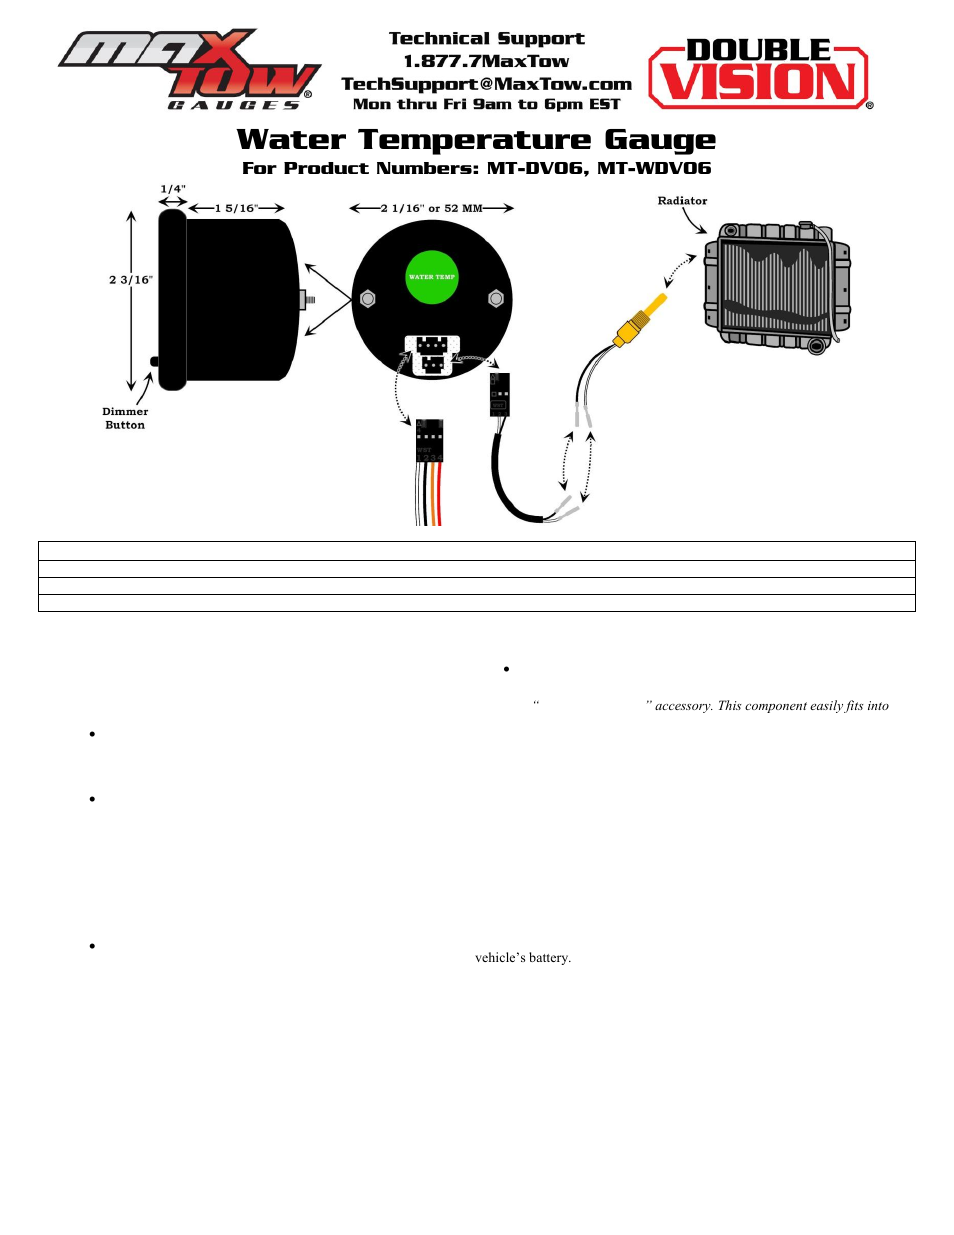 Glowshift Maxtow Series Water Temperature Gauge User